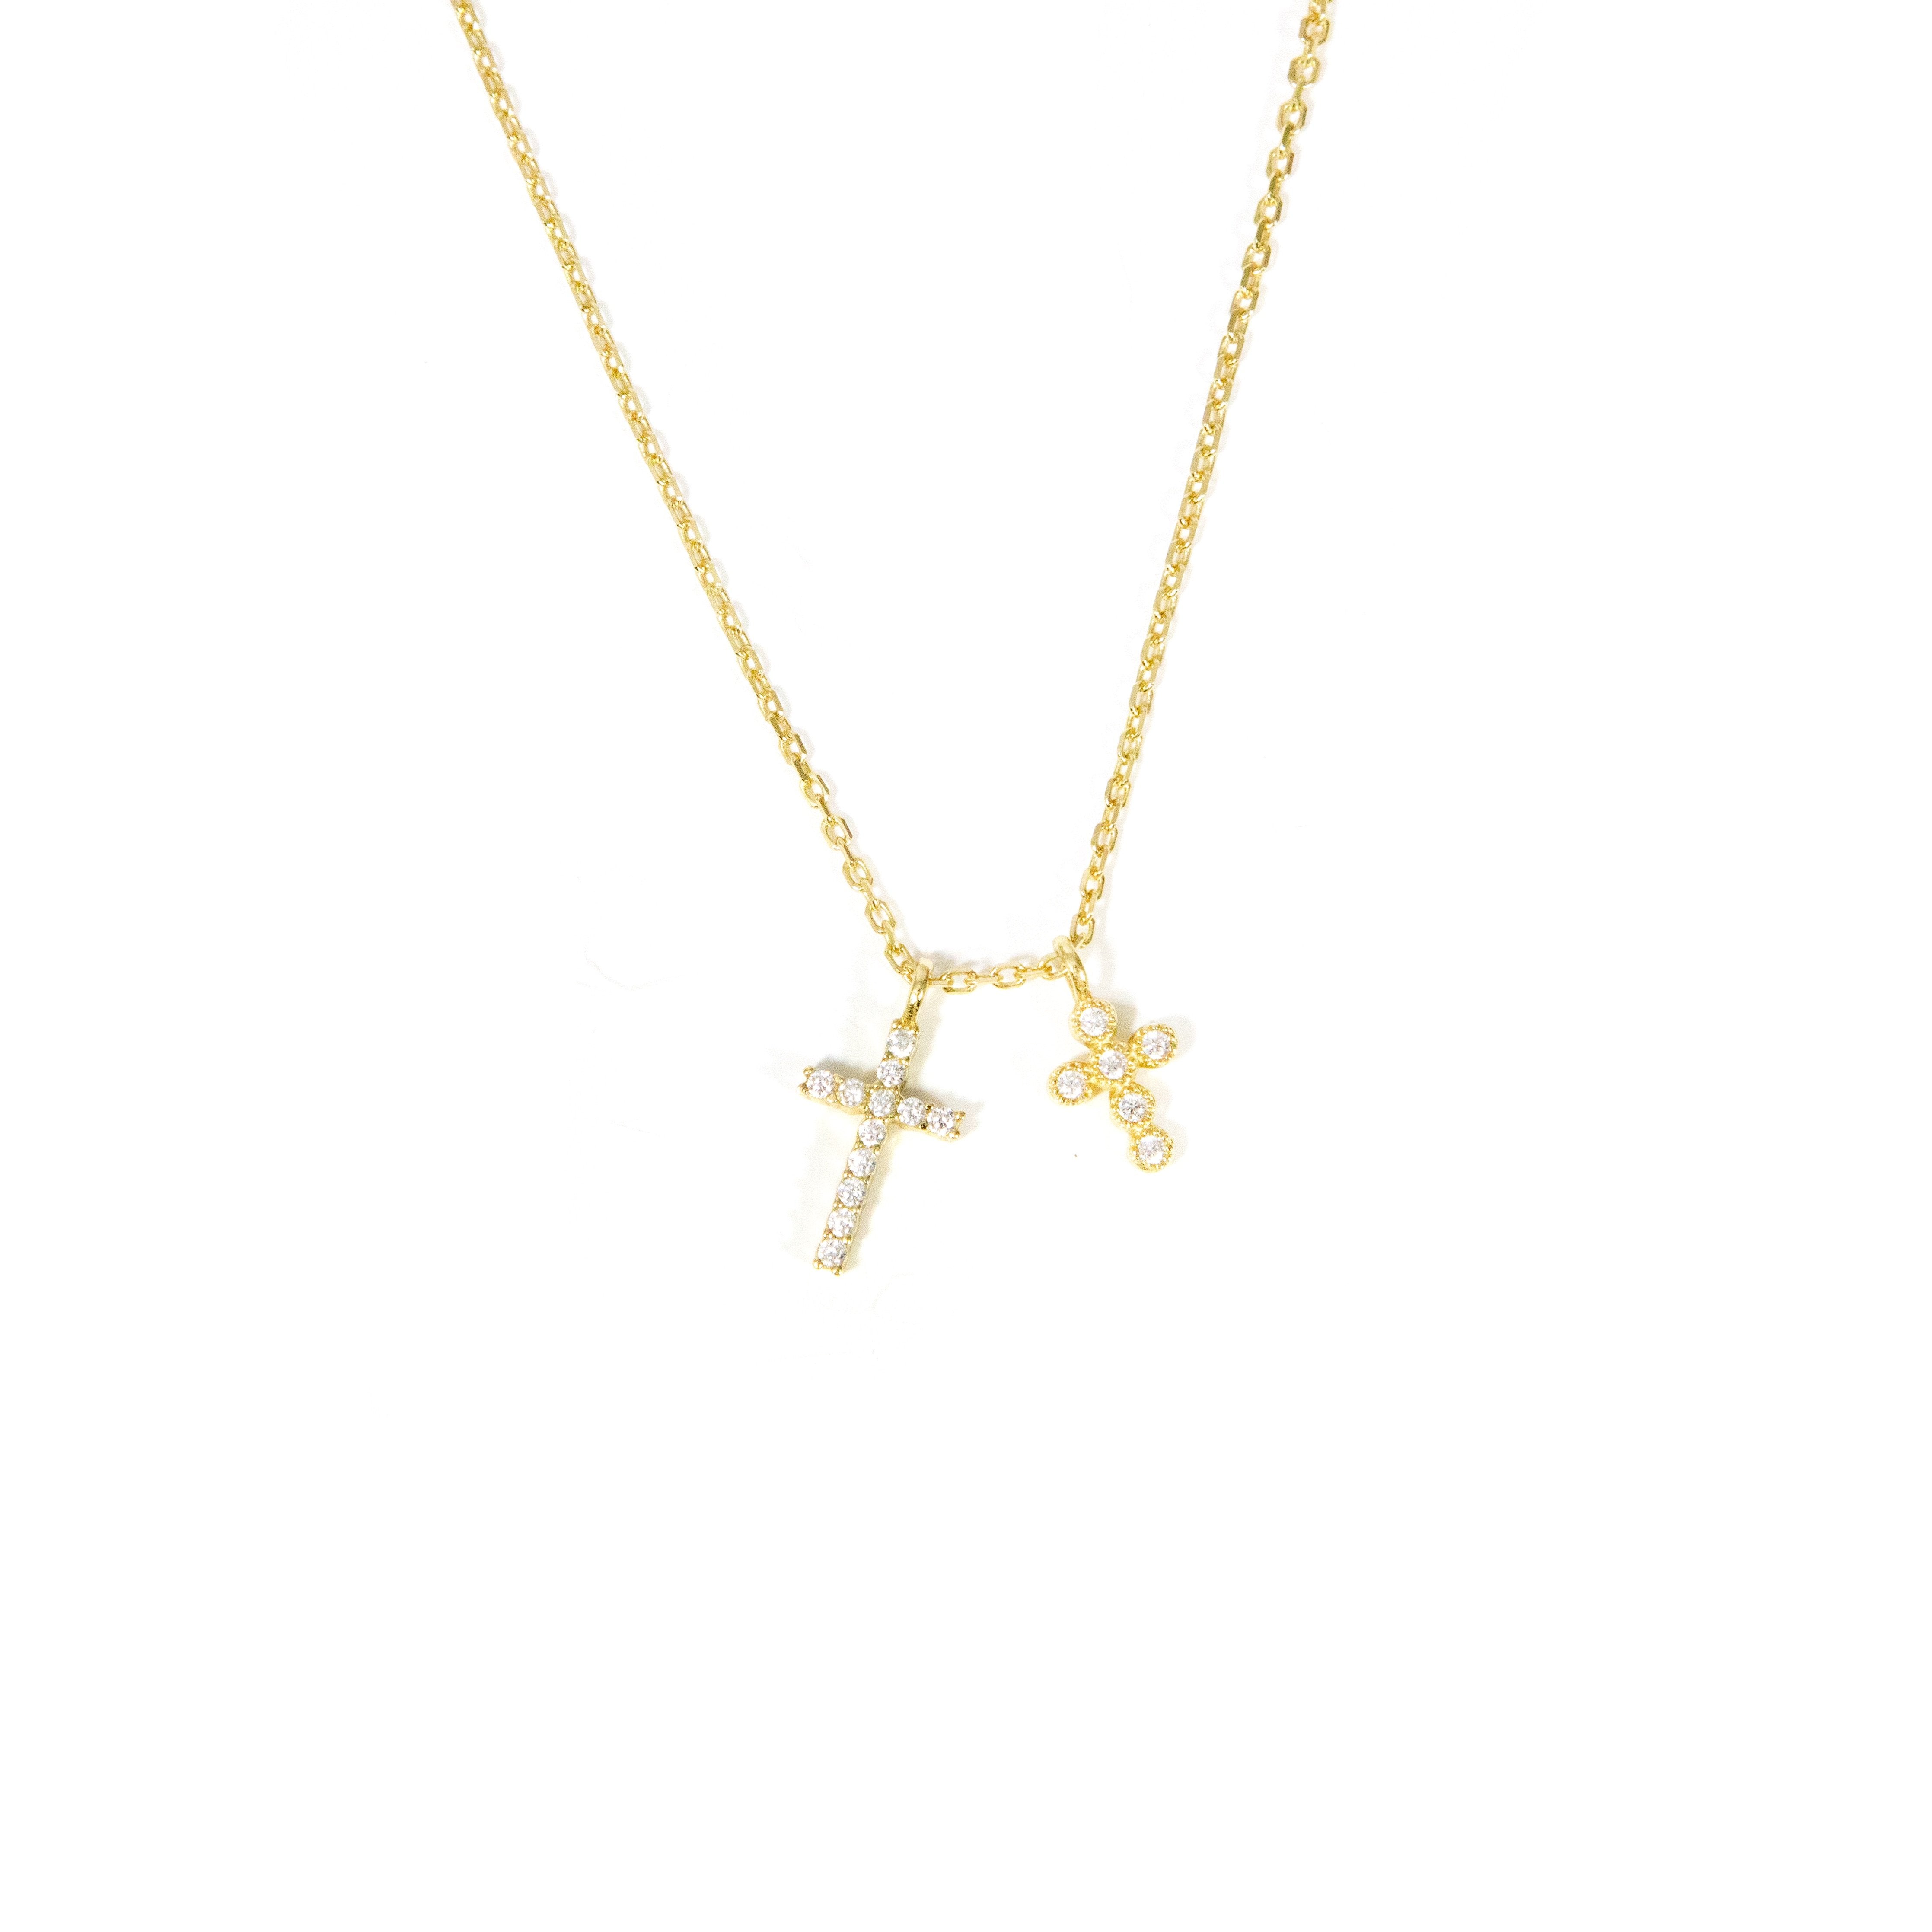 Dainty 9ct gold cross necklace | eBay